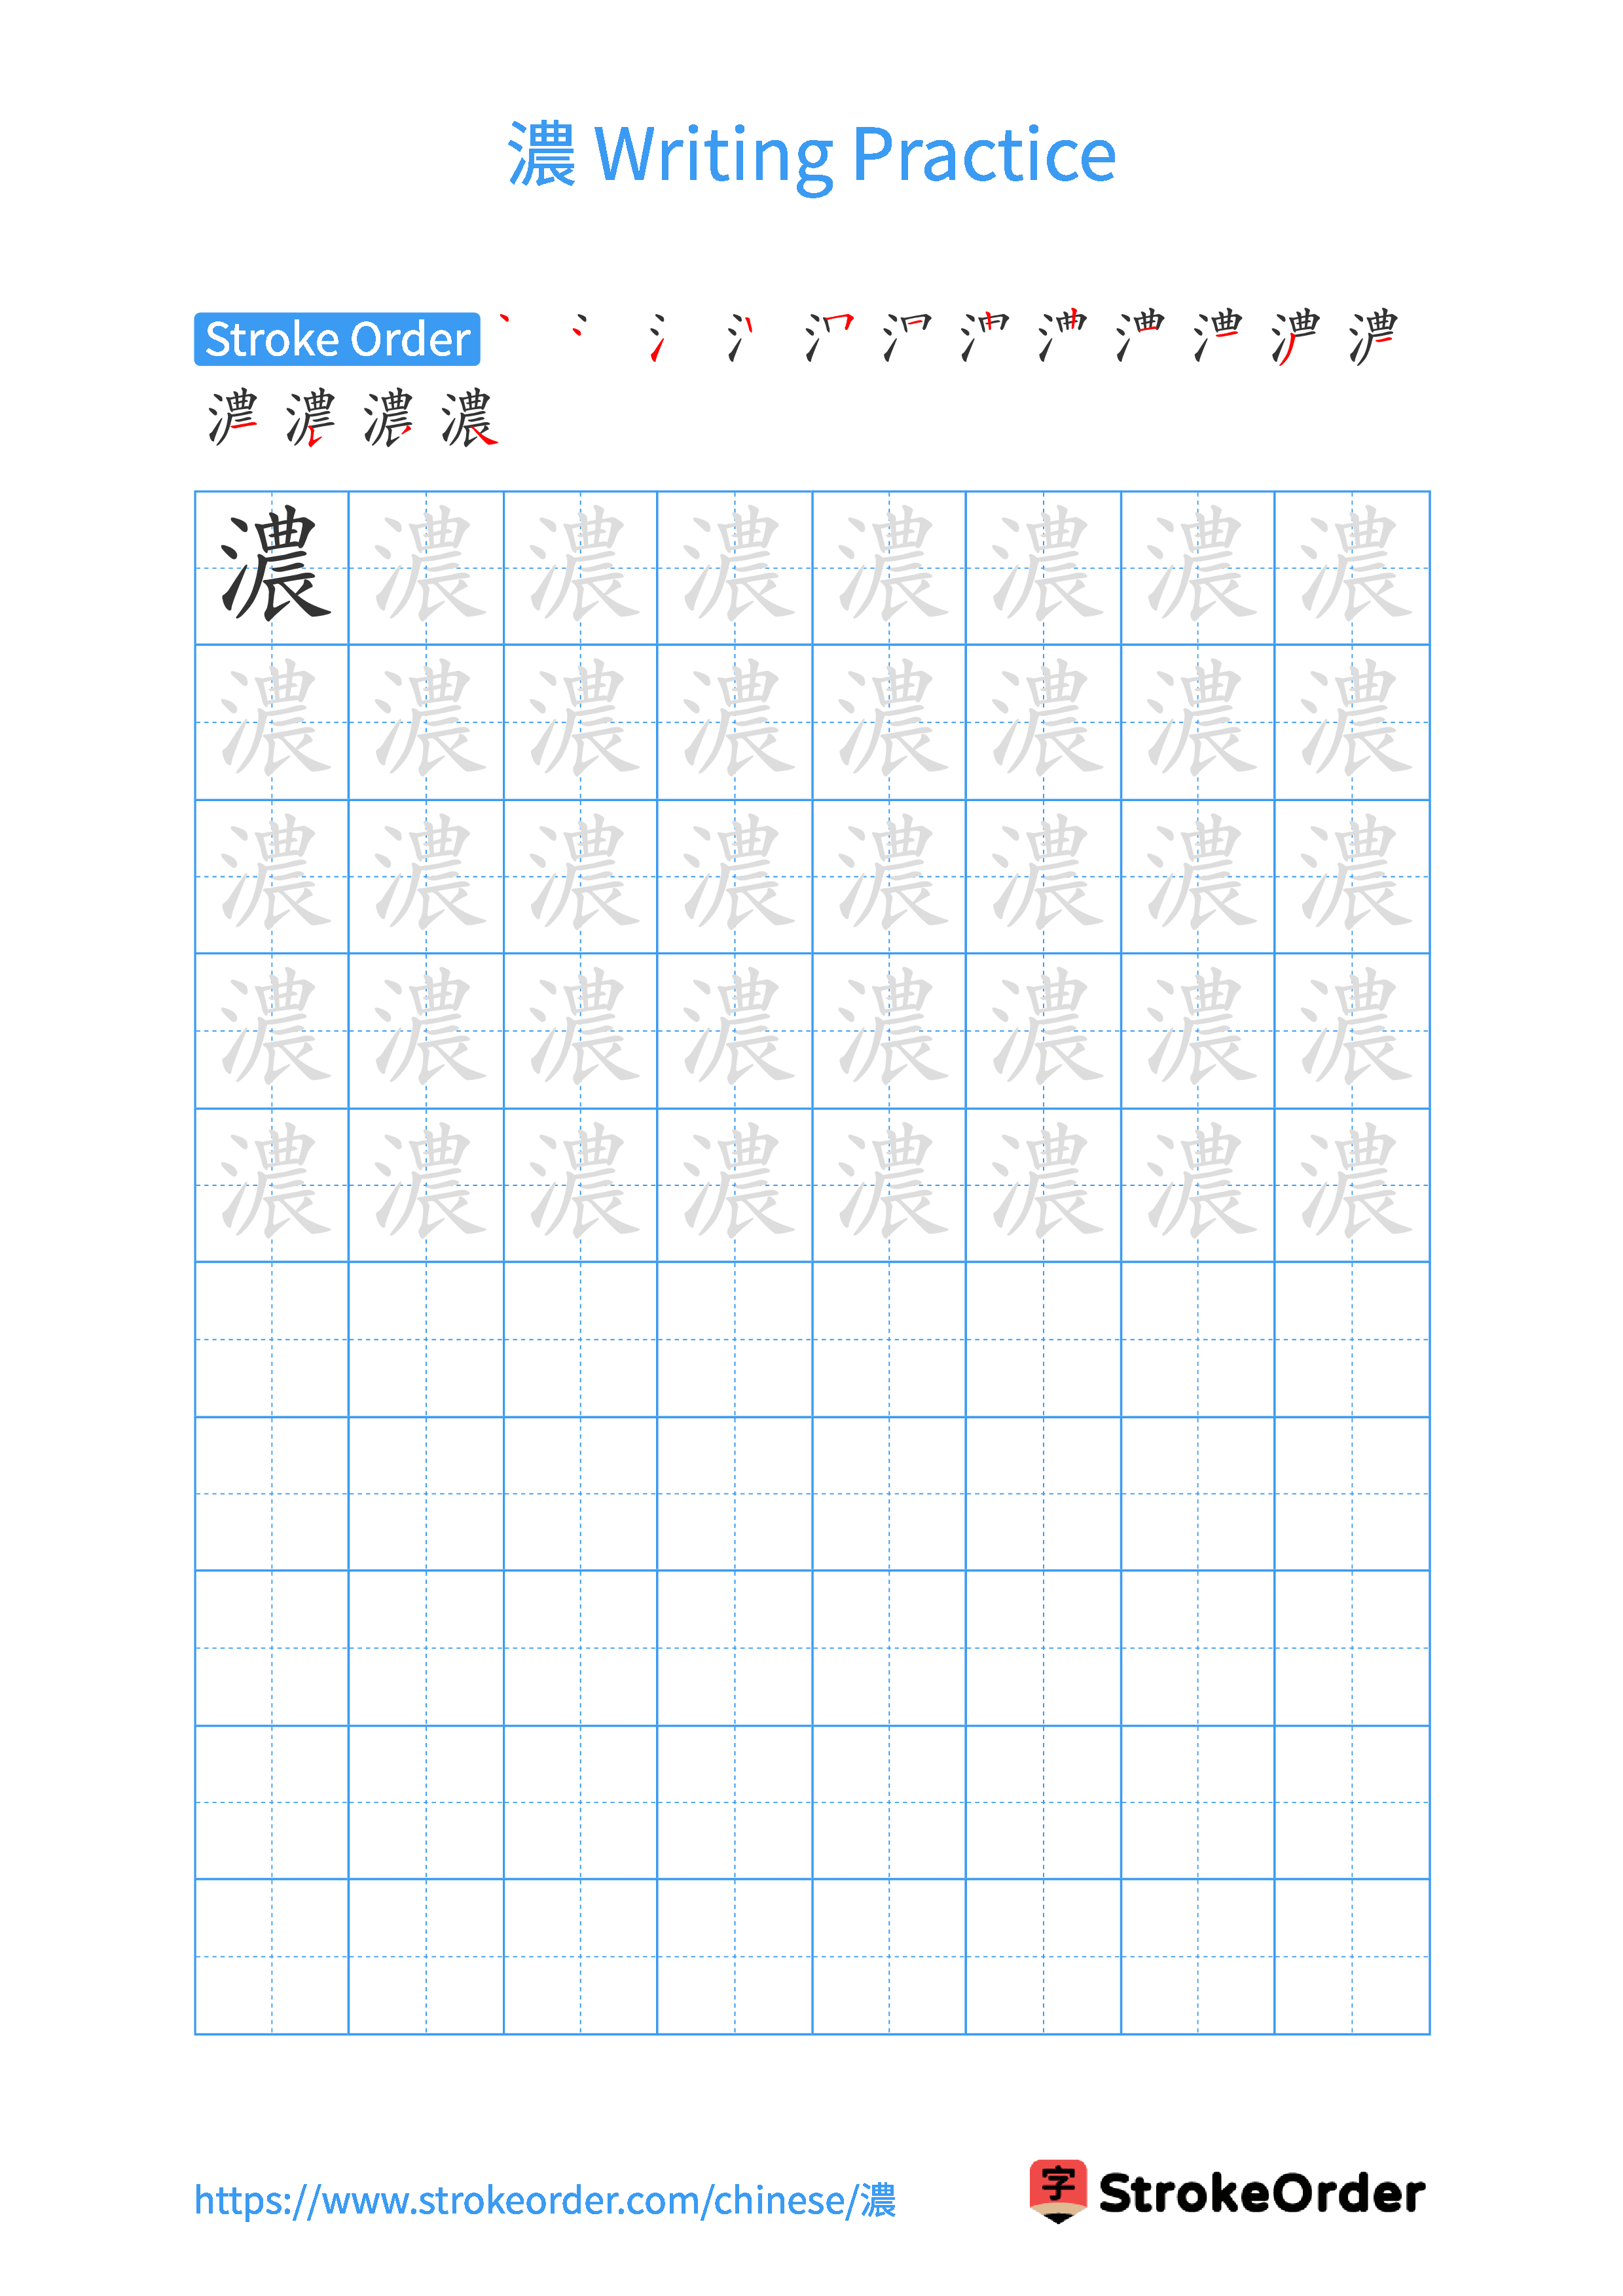 Printable Handwriting Practice Worksheet of the Chinese character 濃 in Portrait Orientation (Tian Zi Ge)